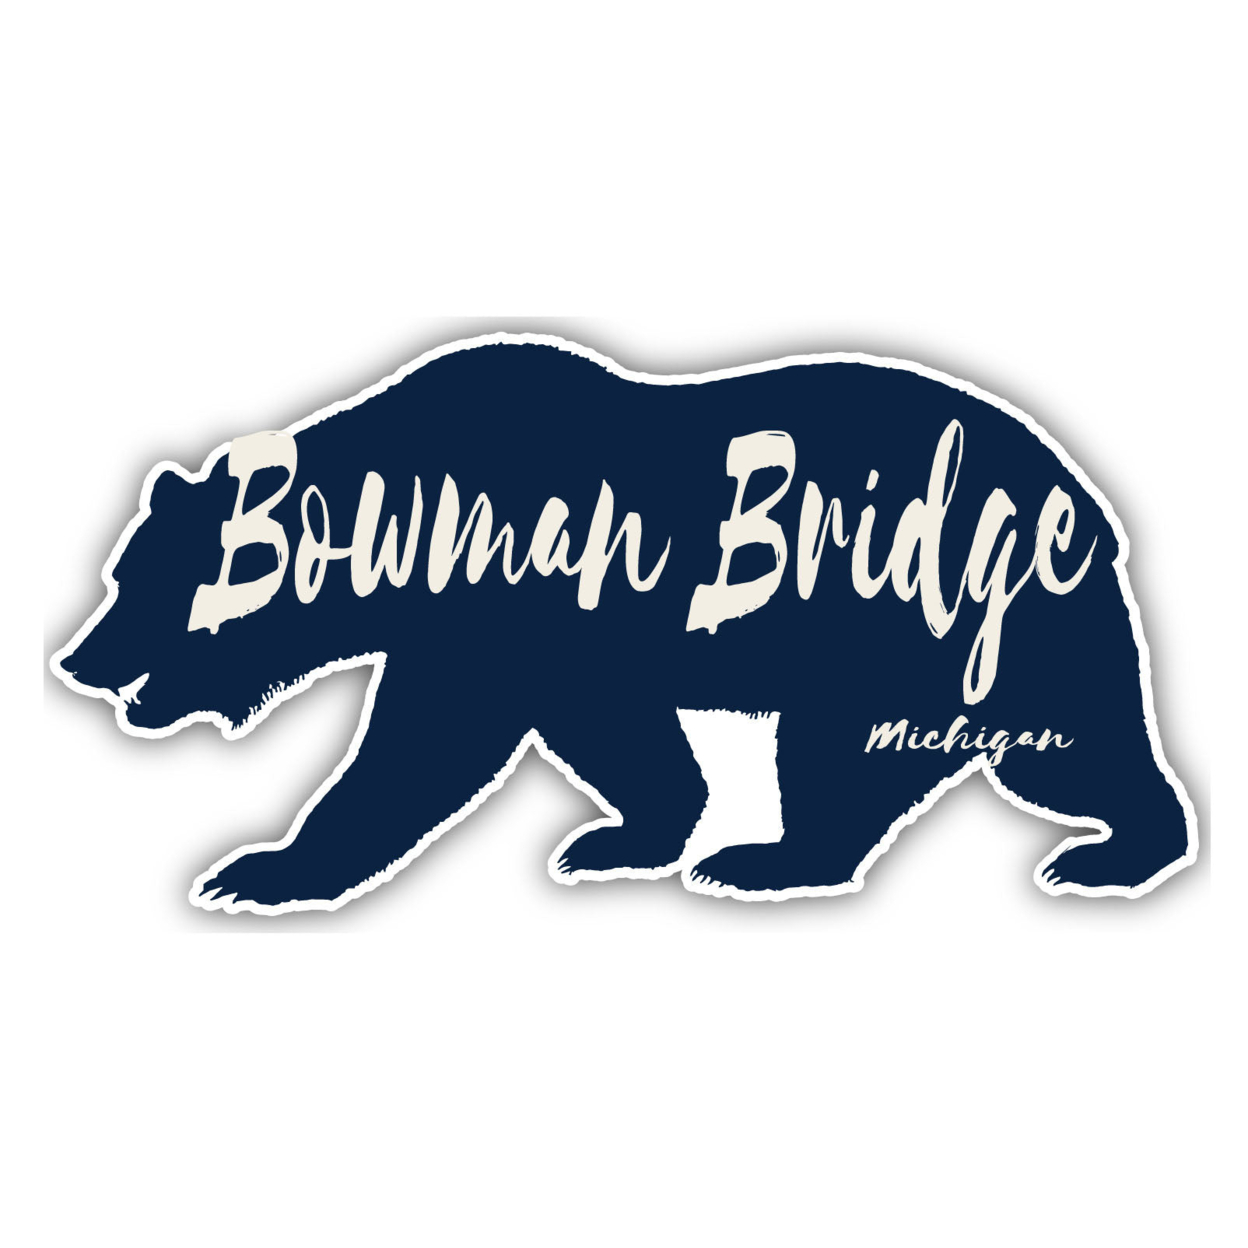 Bowman Bridge Michigan Souvenir Decorative Stickers (Choose Theme And Size) - Single Unit, 4-Inch, Bear